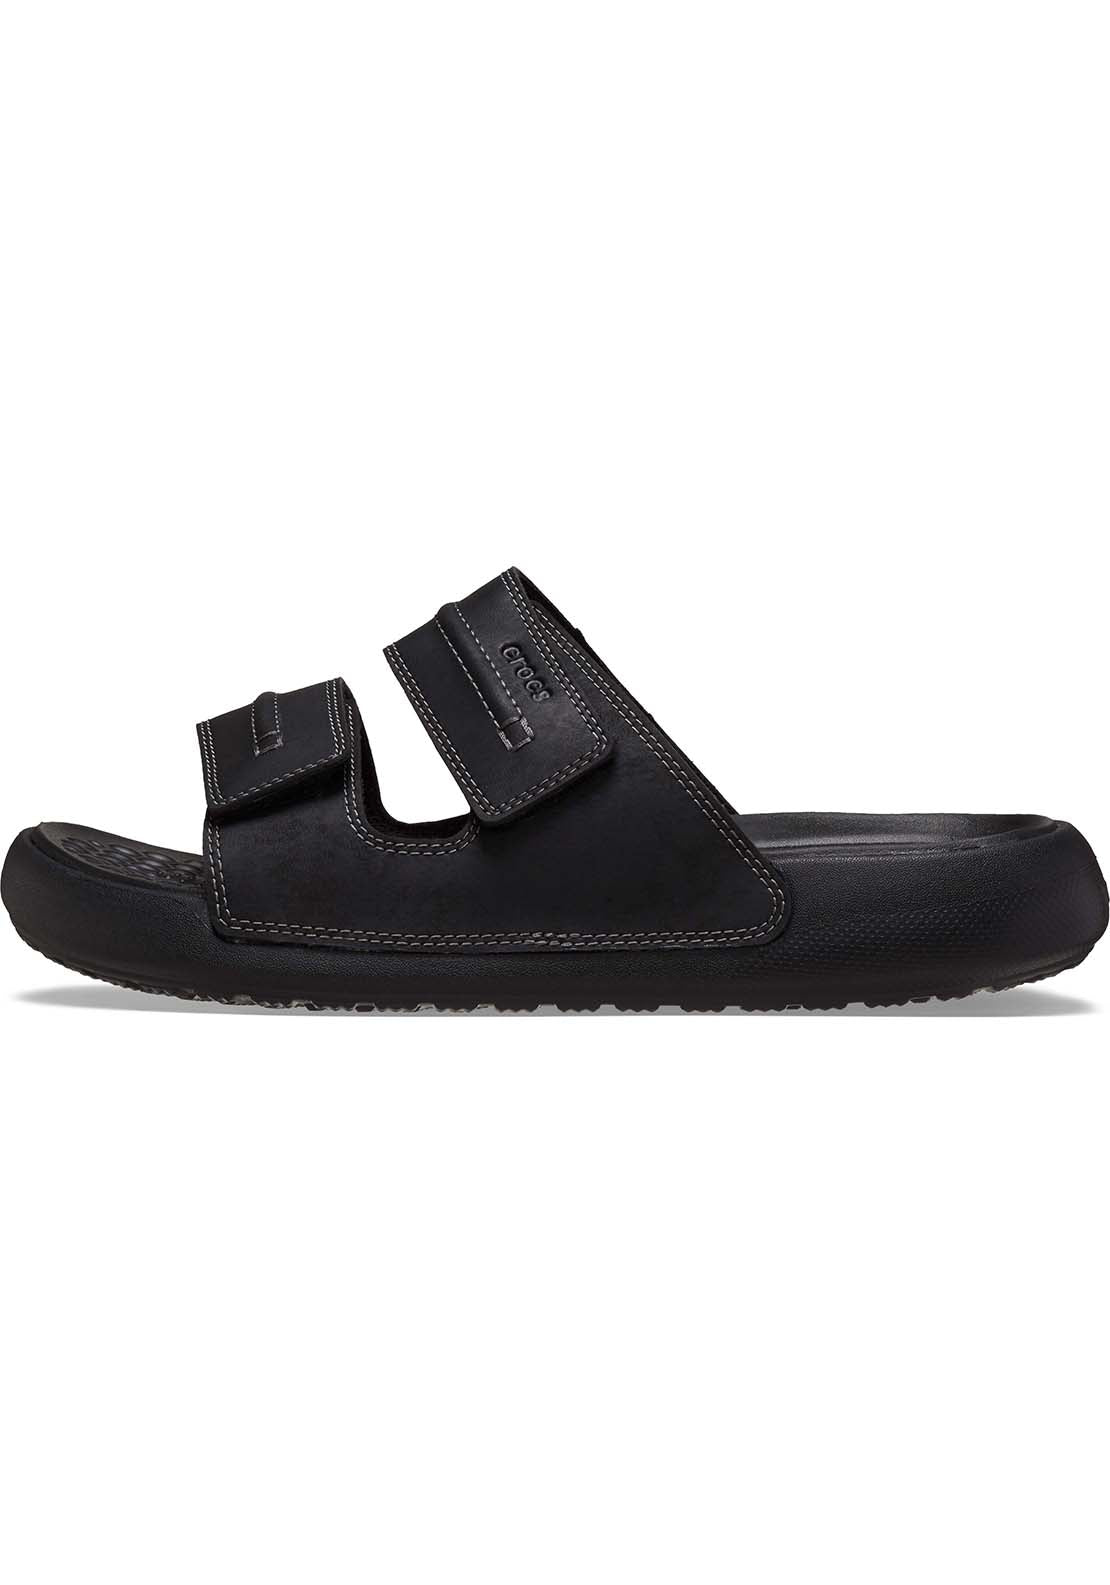 Crocs Yukon Vista II Sandal - Black 3 Shaws Department Stores